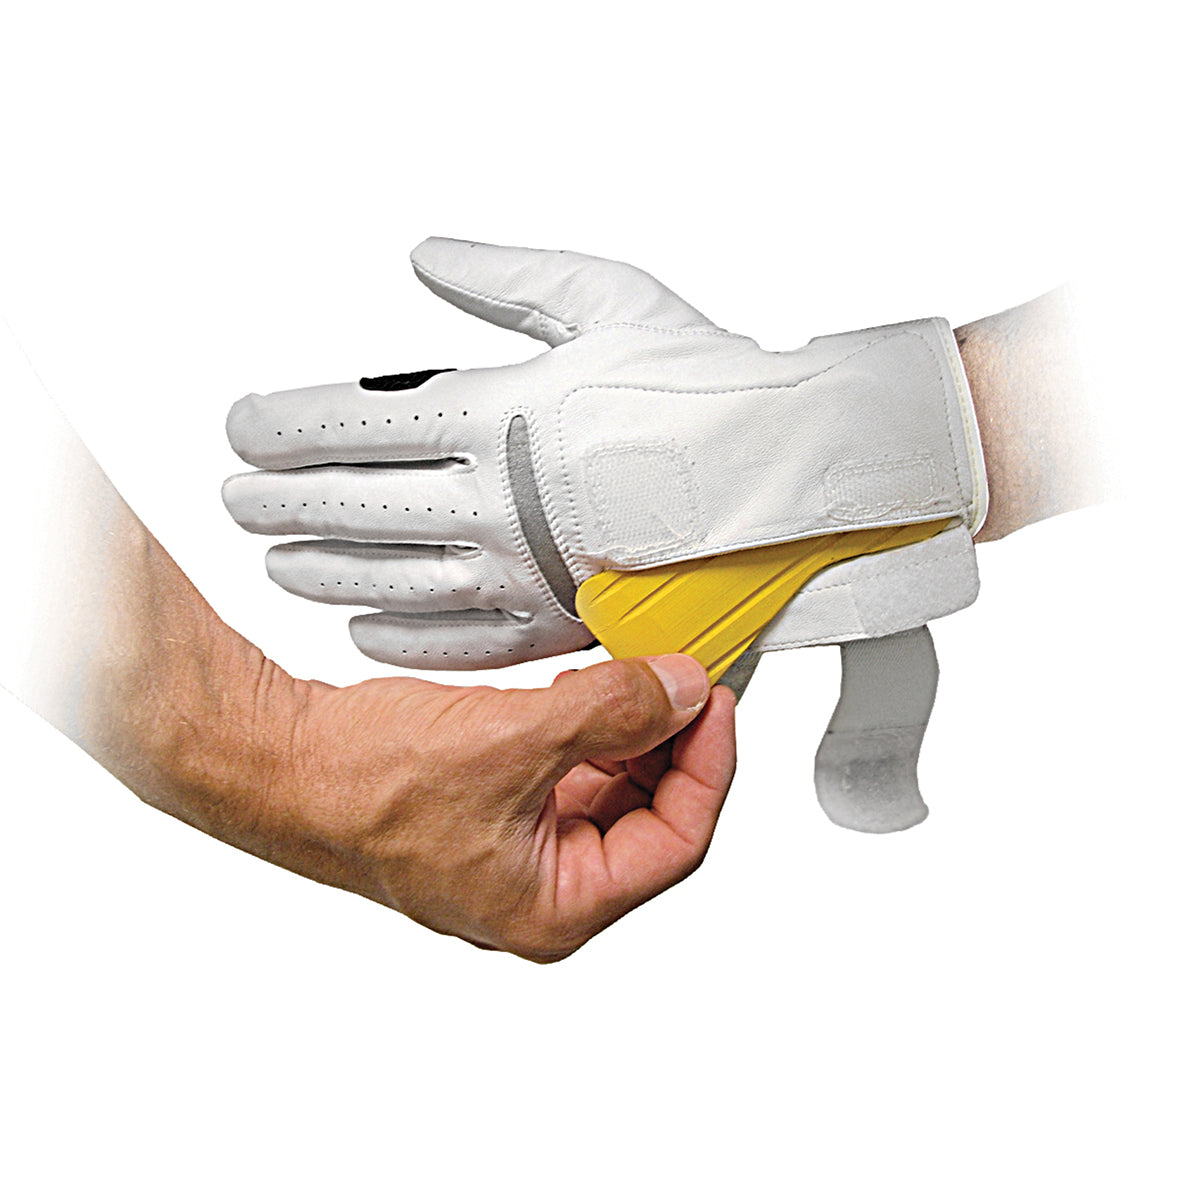 SKLZ Left Hand Smart Golf Glove - White SKLZ